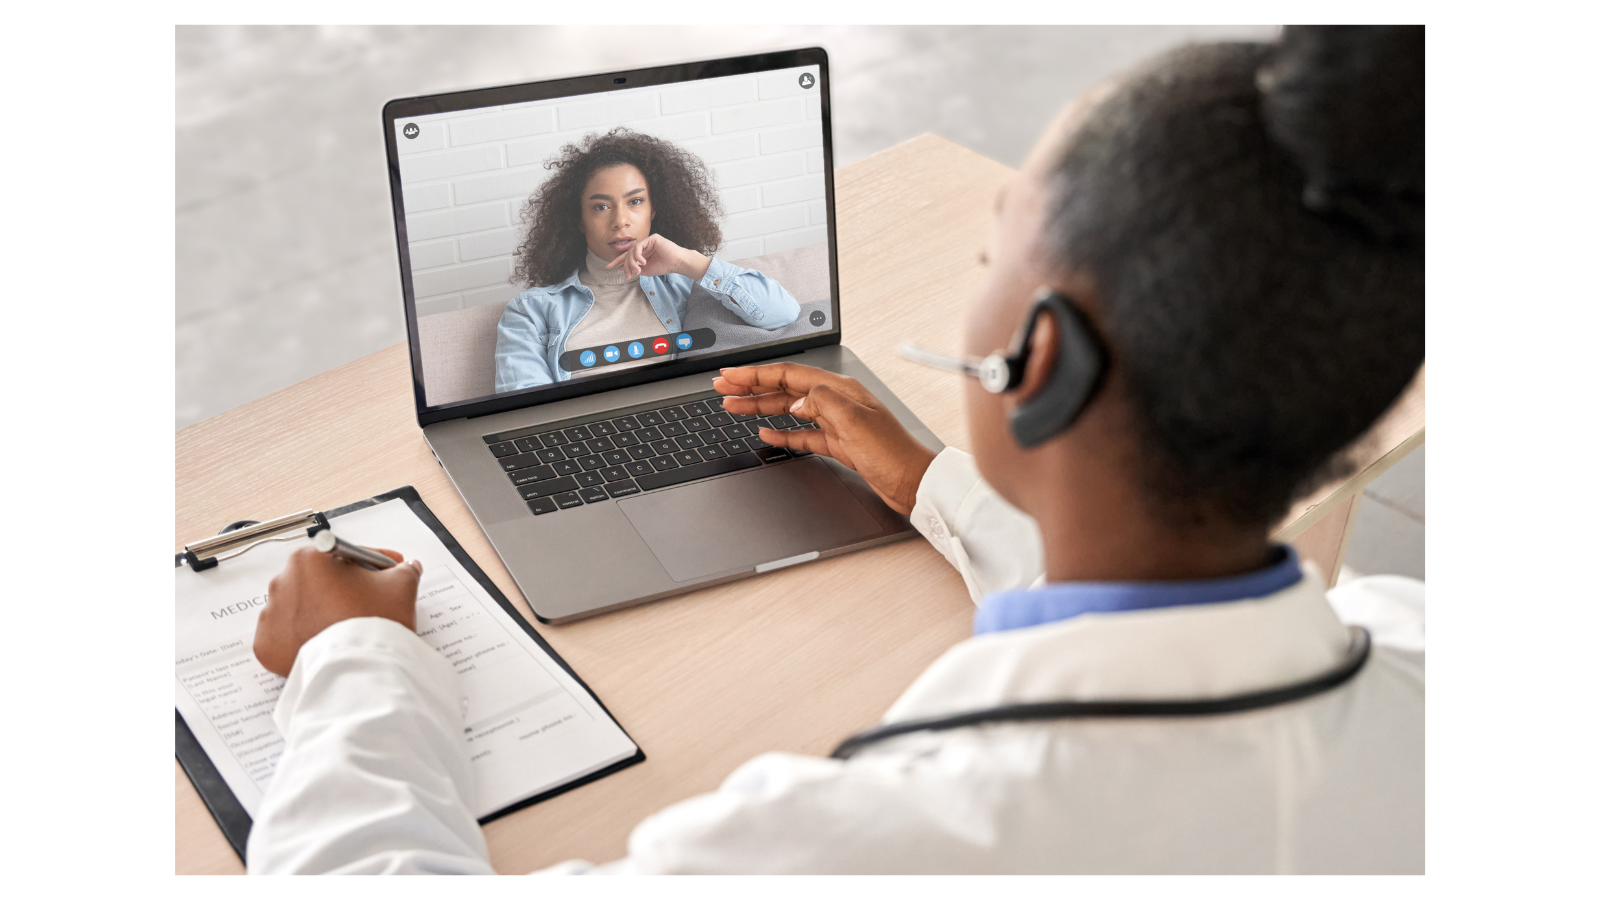 A clinician providing telehealth services on a laptop